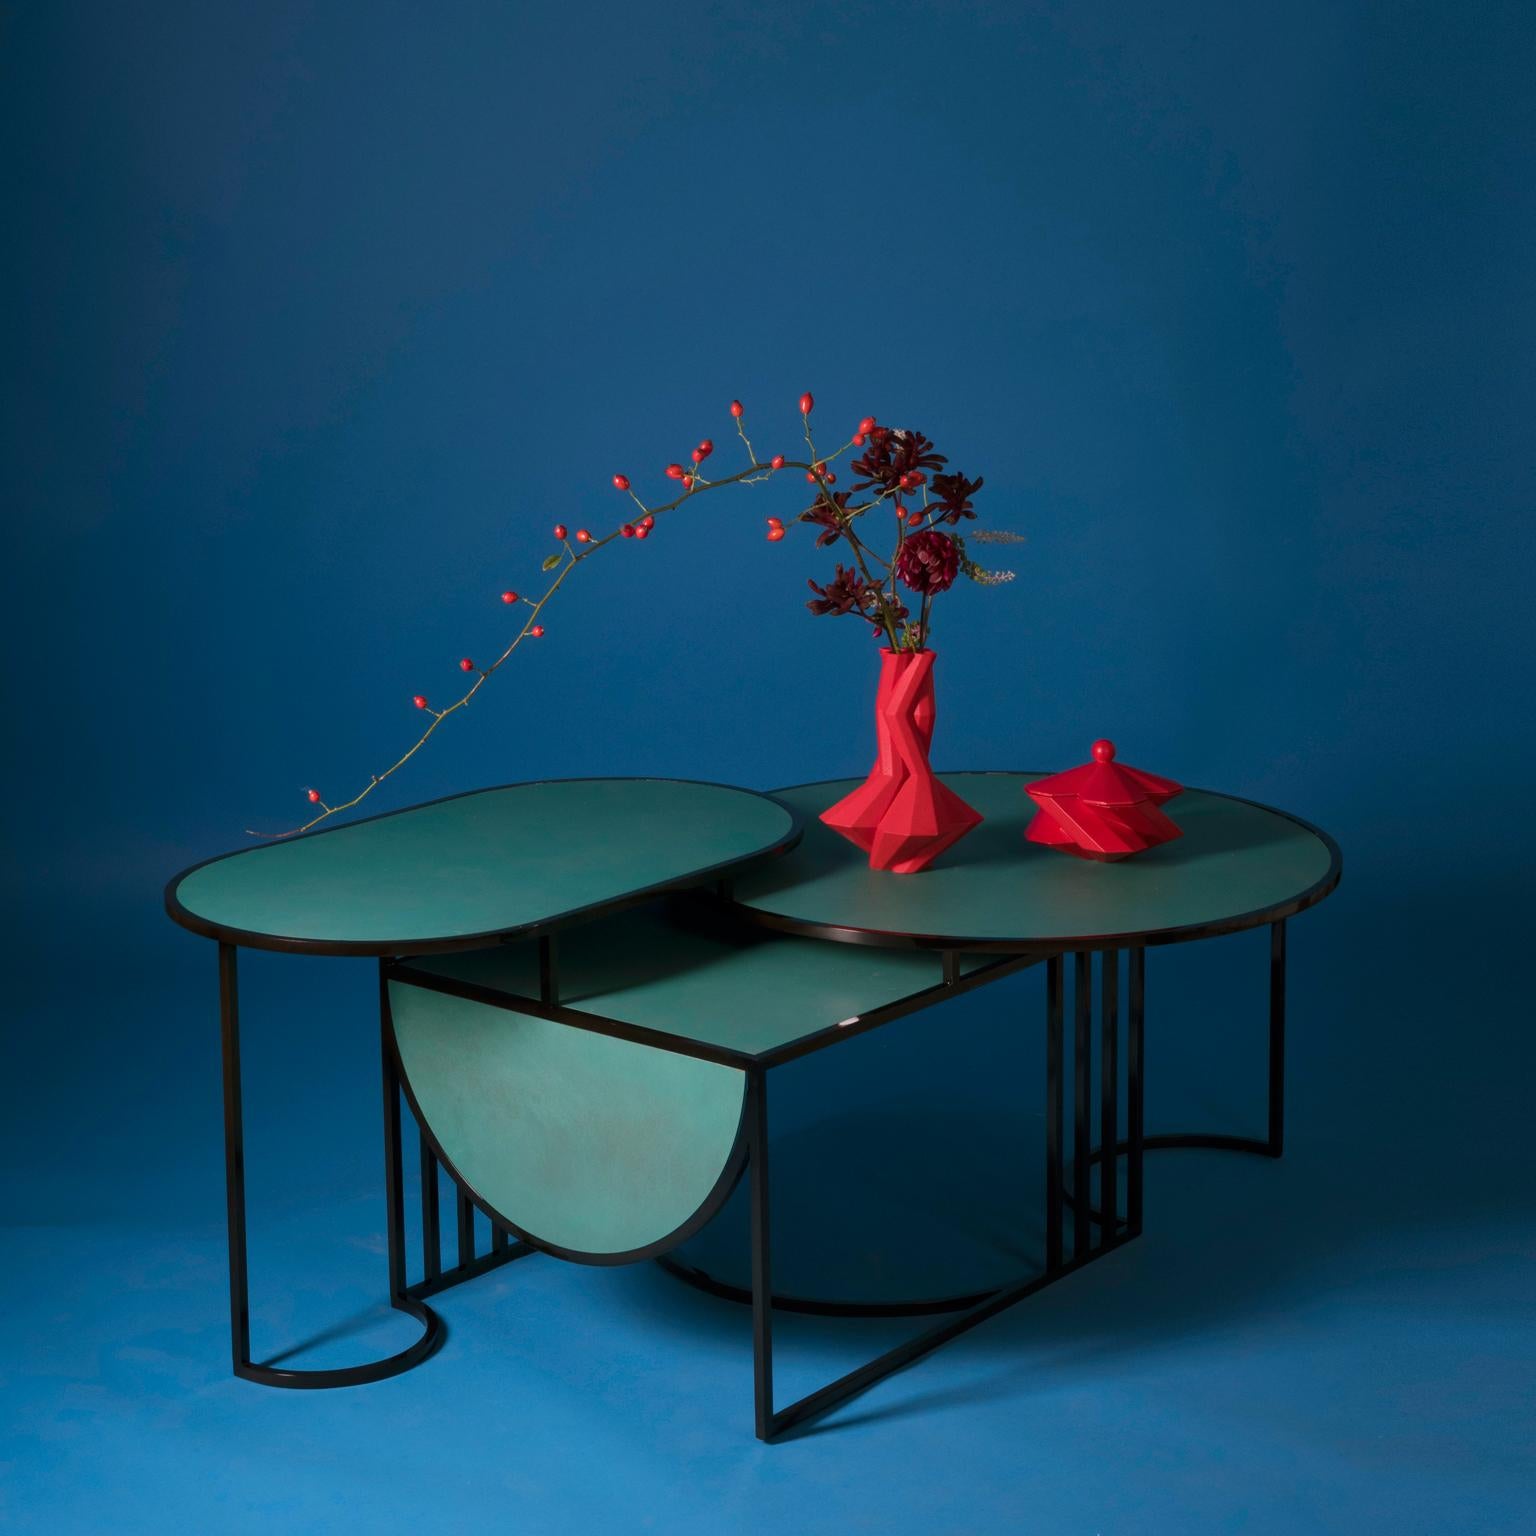 Italian Orbit Coffee Table, Steel Frame and Verdigris Copper Top, by Lara Bohinc